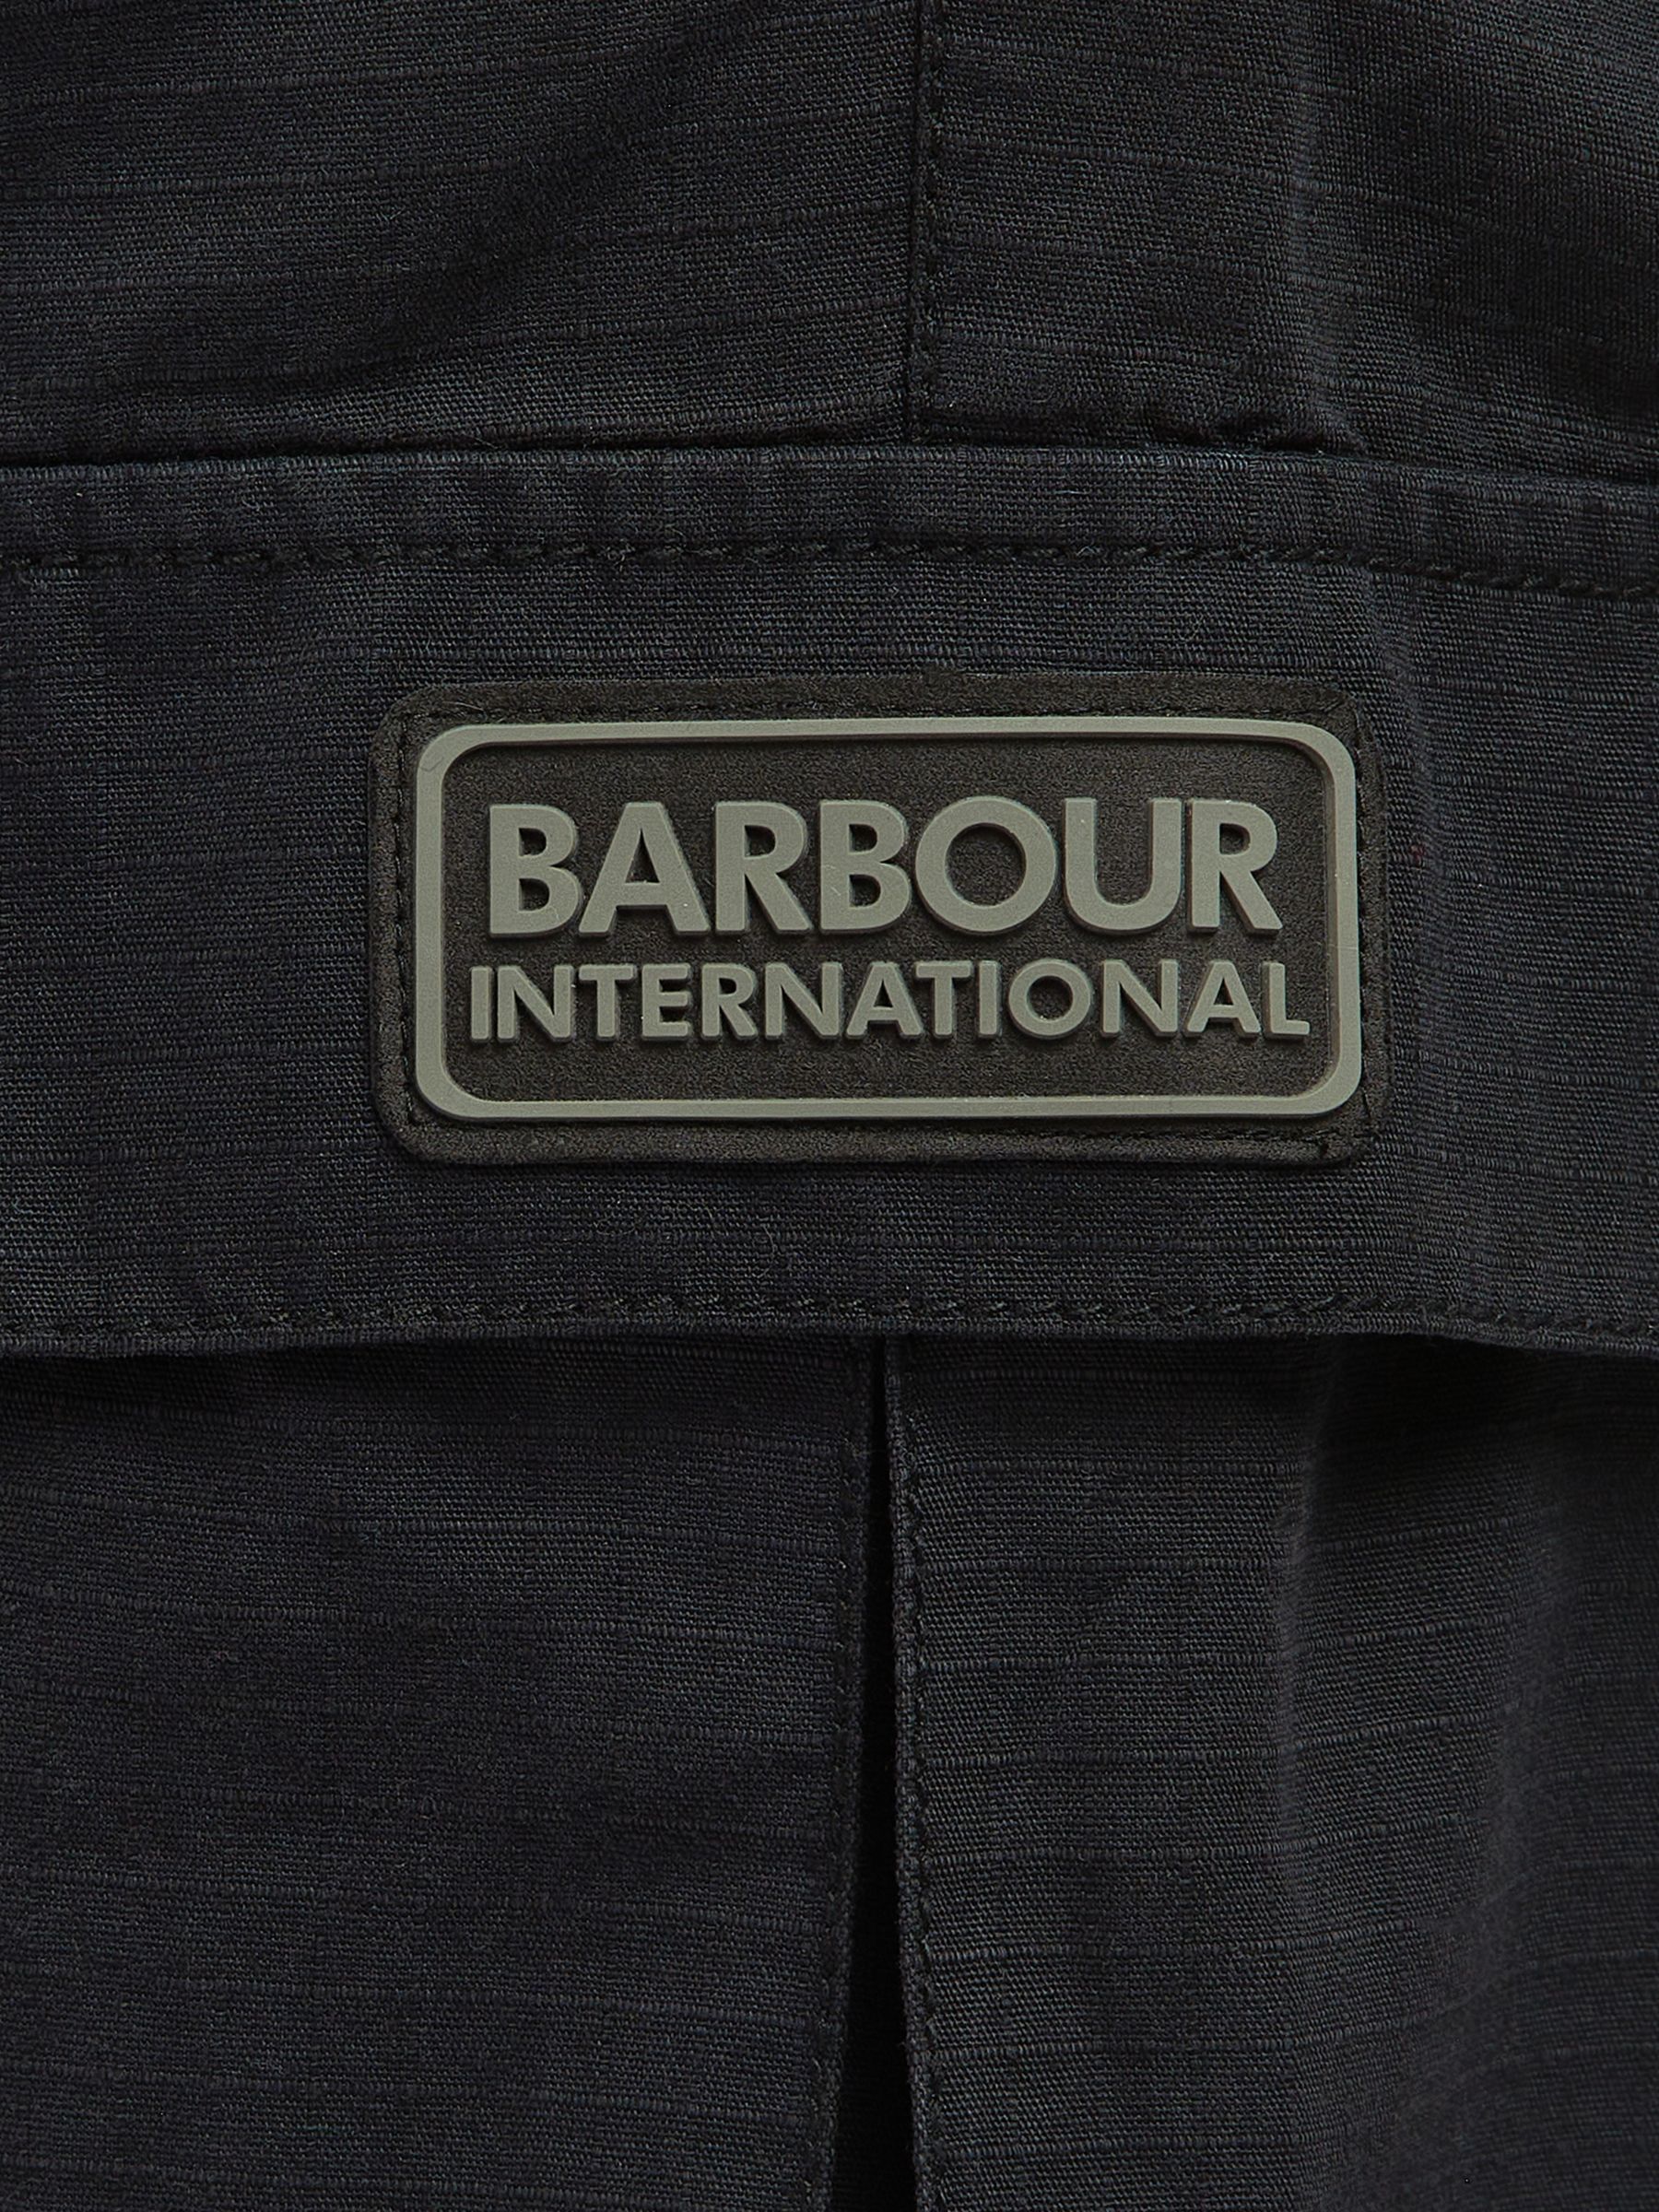 Barbour International Penton Cargo Trousers, Black at John Lewis & Partners